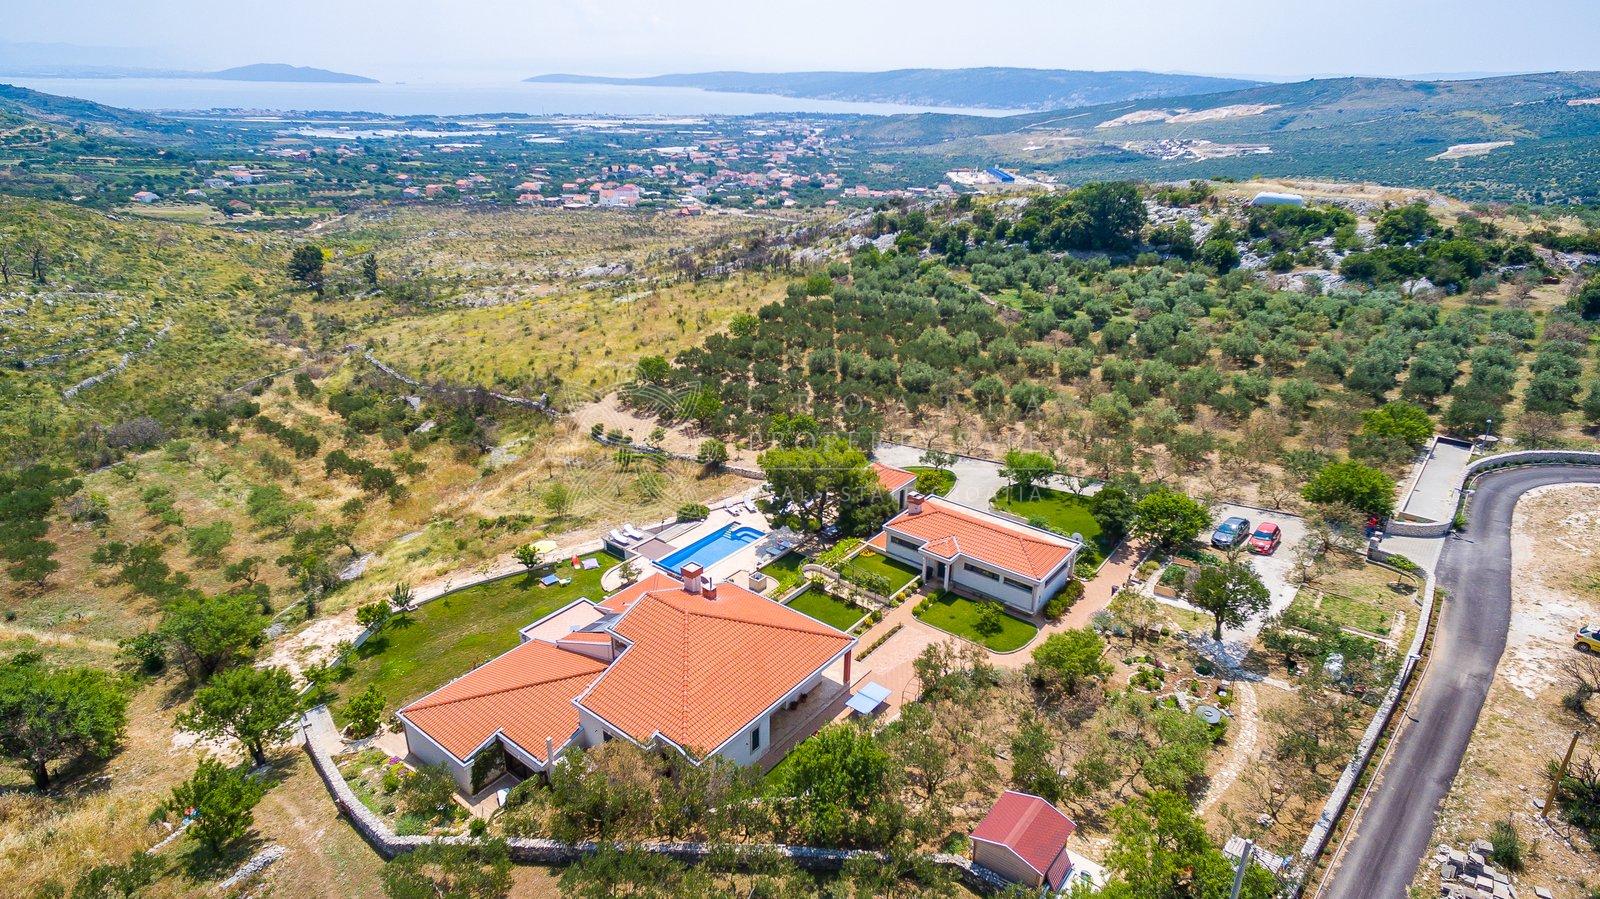 Croatia Trogir area sea view real estate for sale